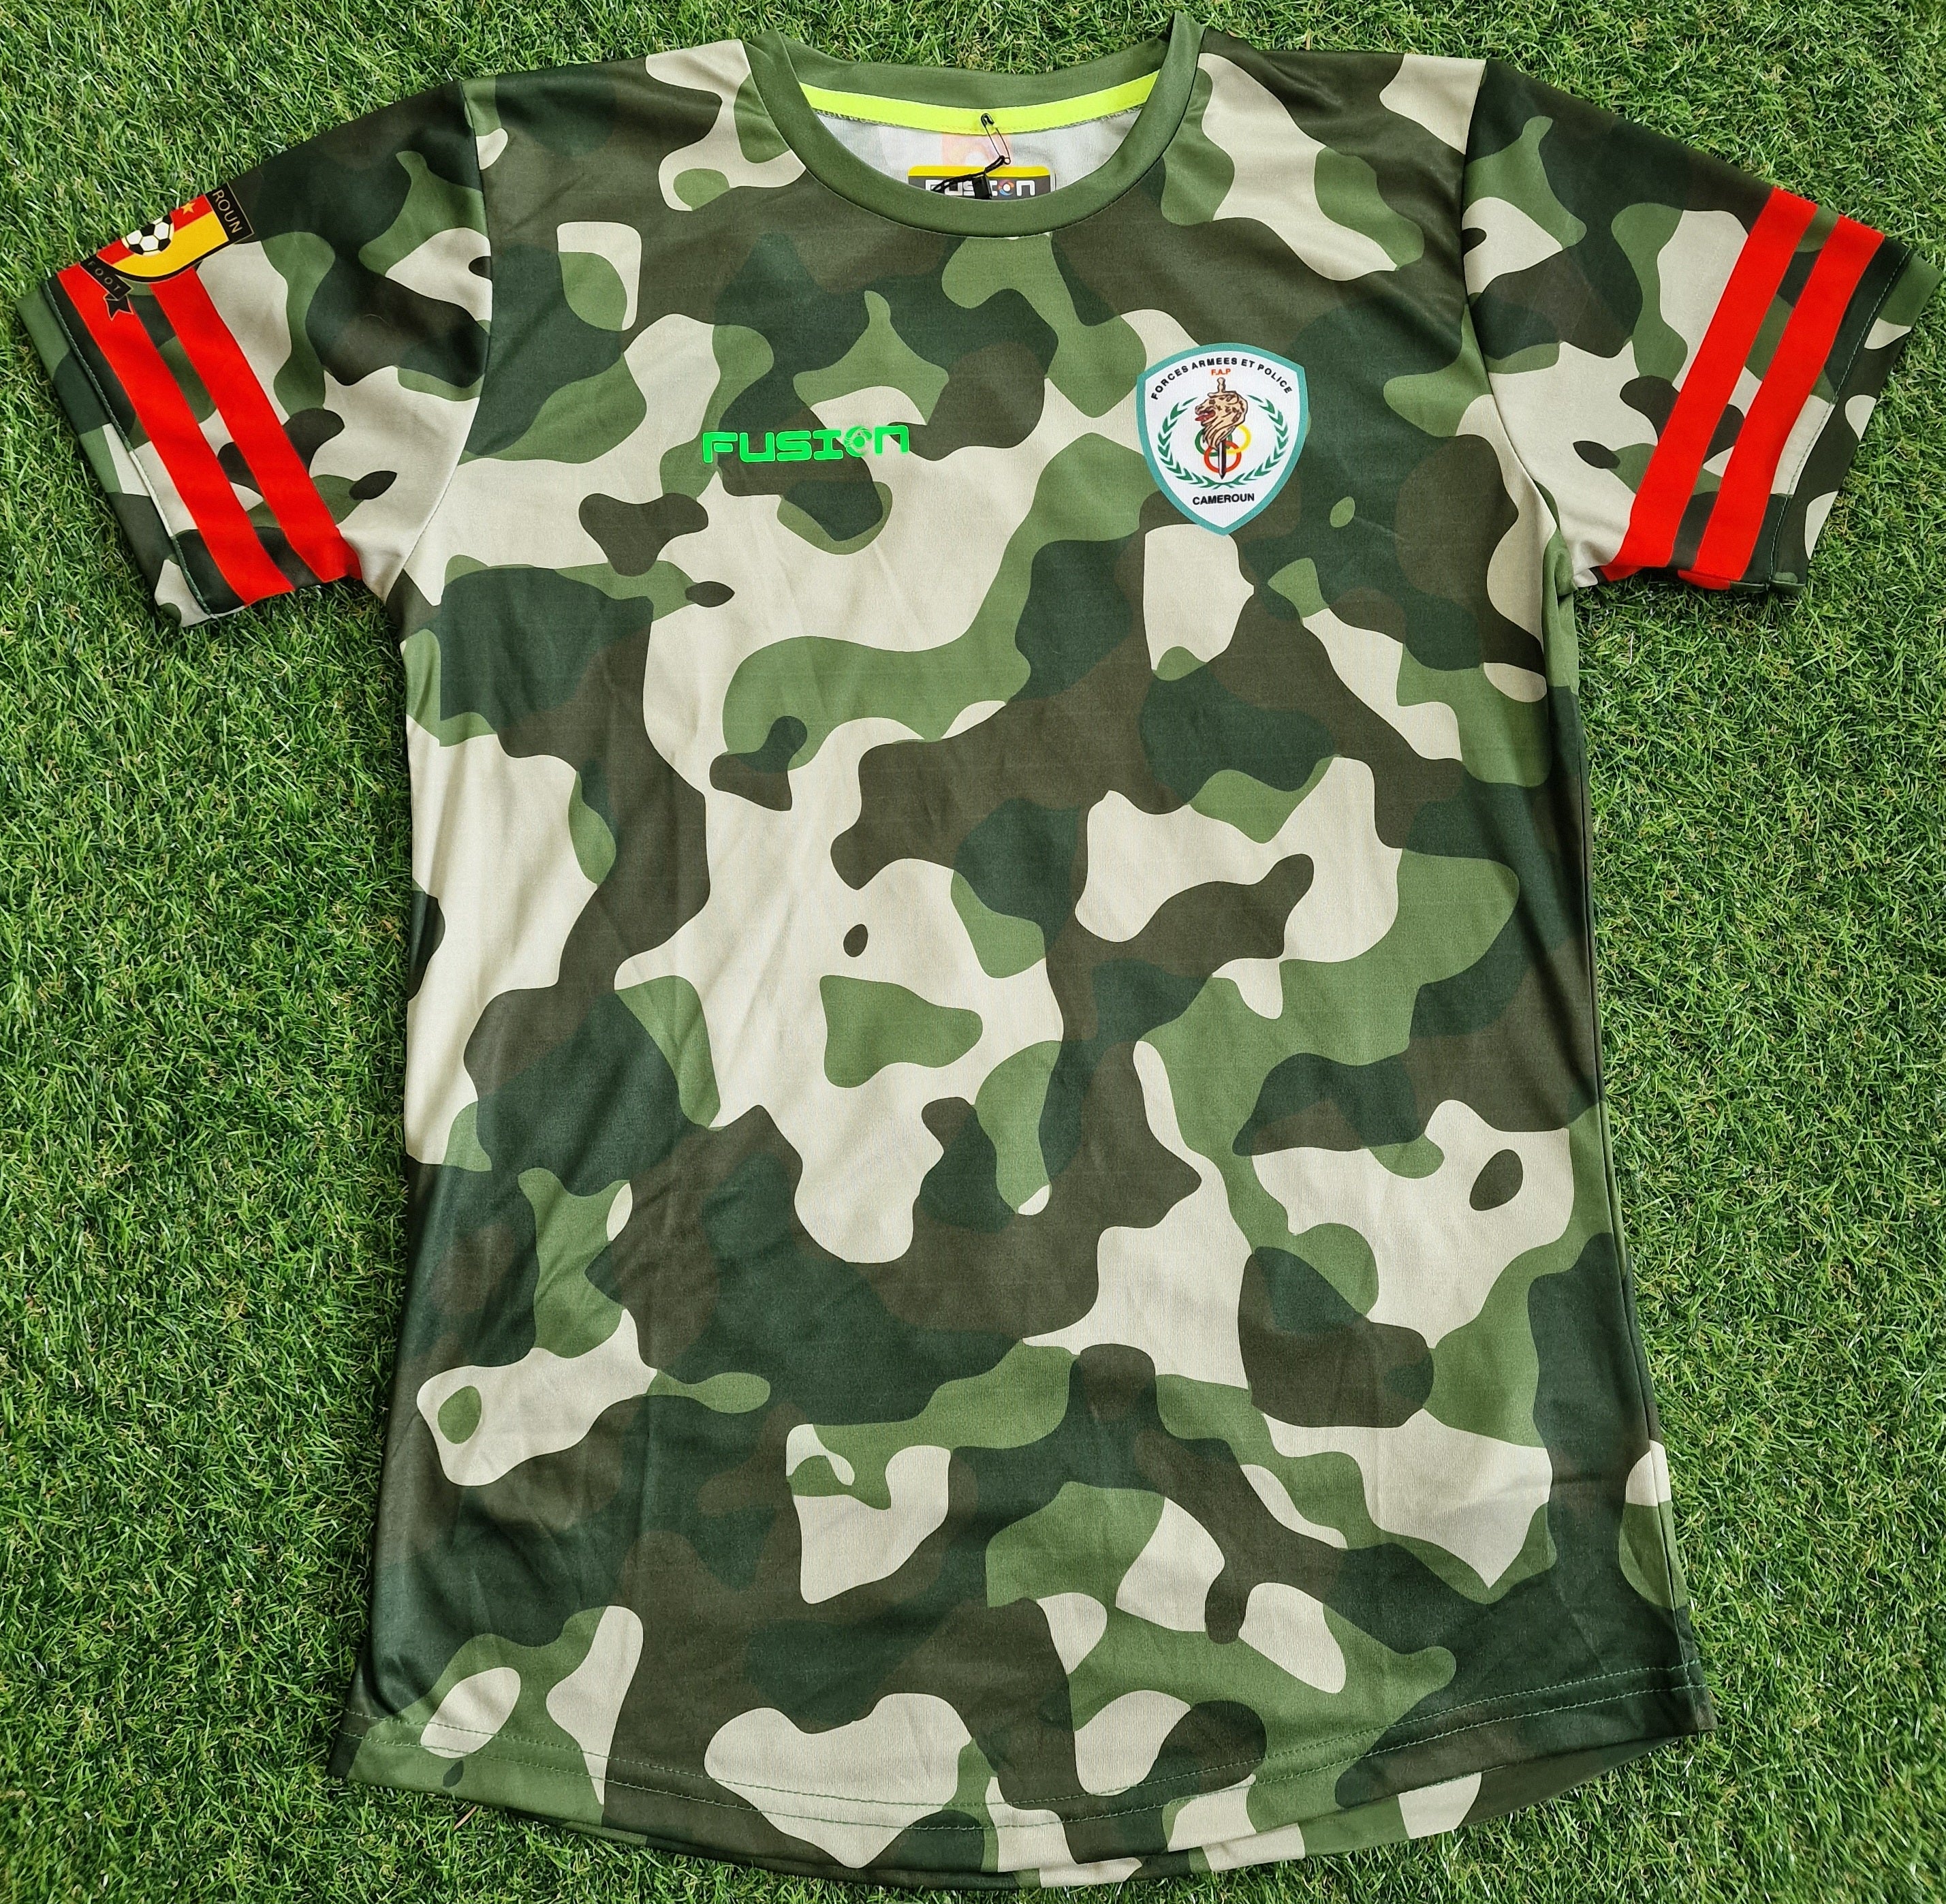 Forces Armees et Police Home Shirt (FAP) 2020/21 - M